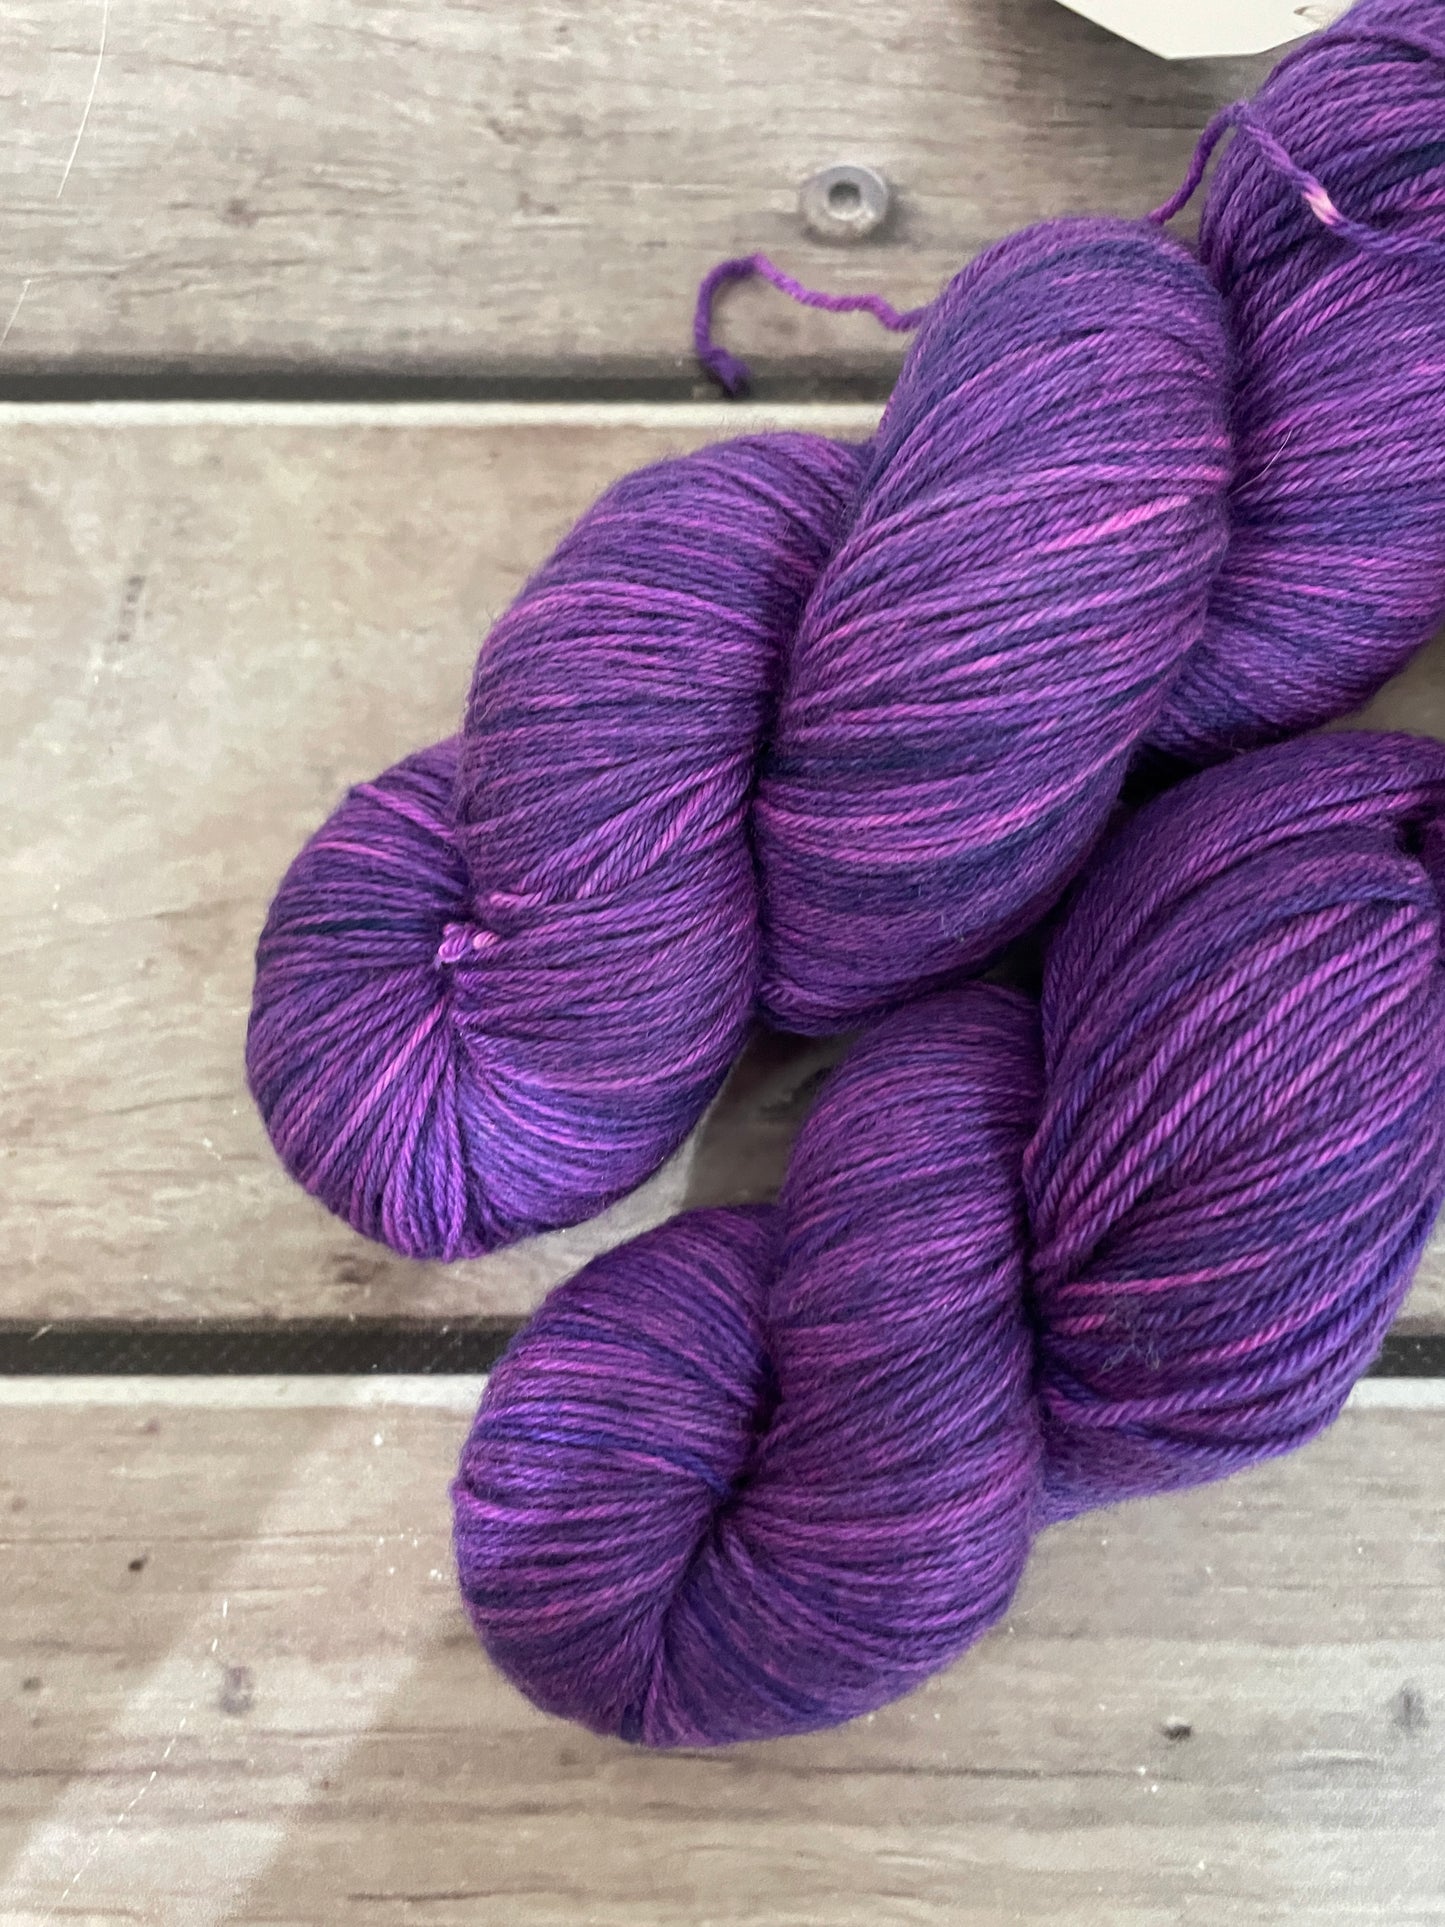 Clematis - sock yarn in merino and nylon yarn - Darjeeling